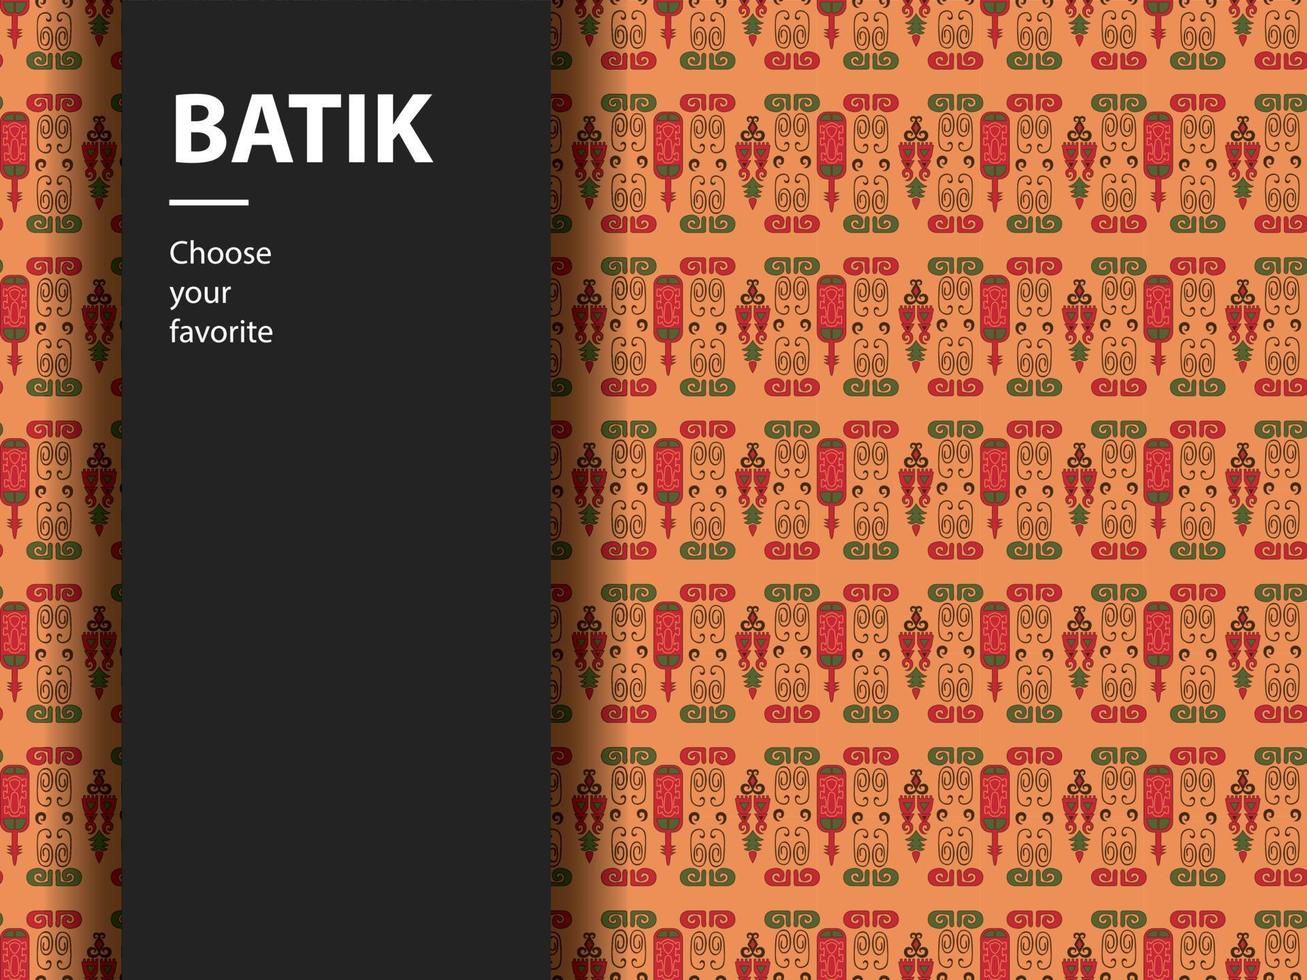 vetor de batik étnico padrão indonésio moda sem costura vintage têxtil abstrato